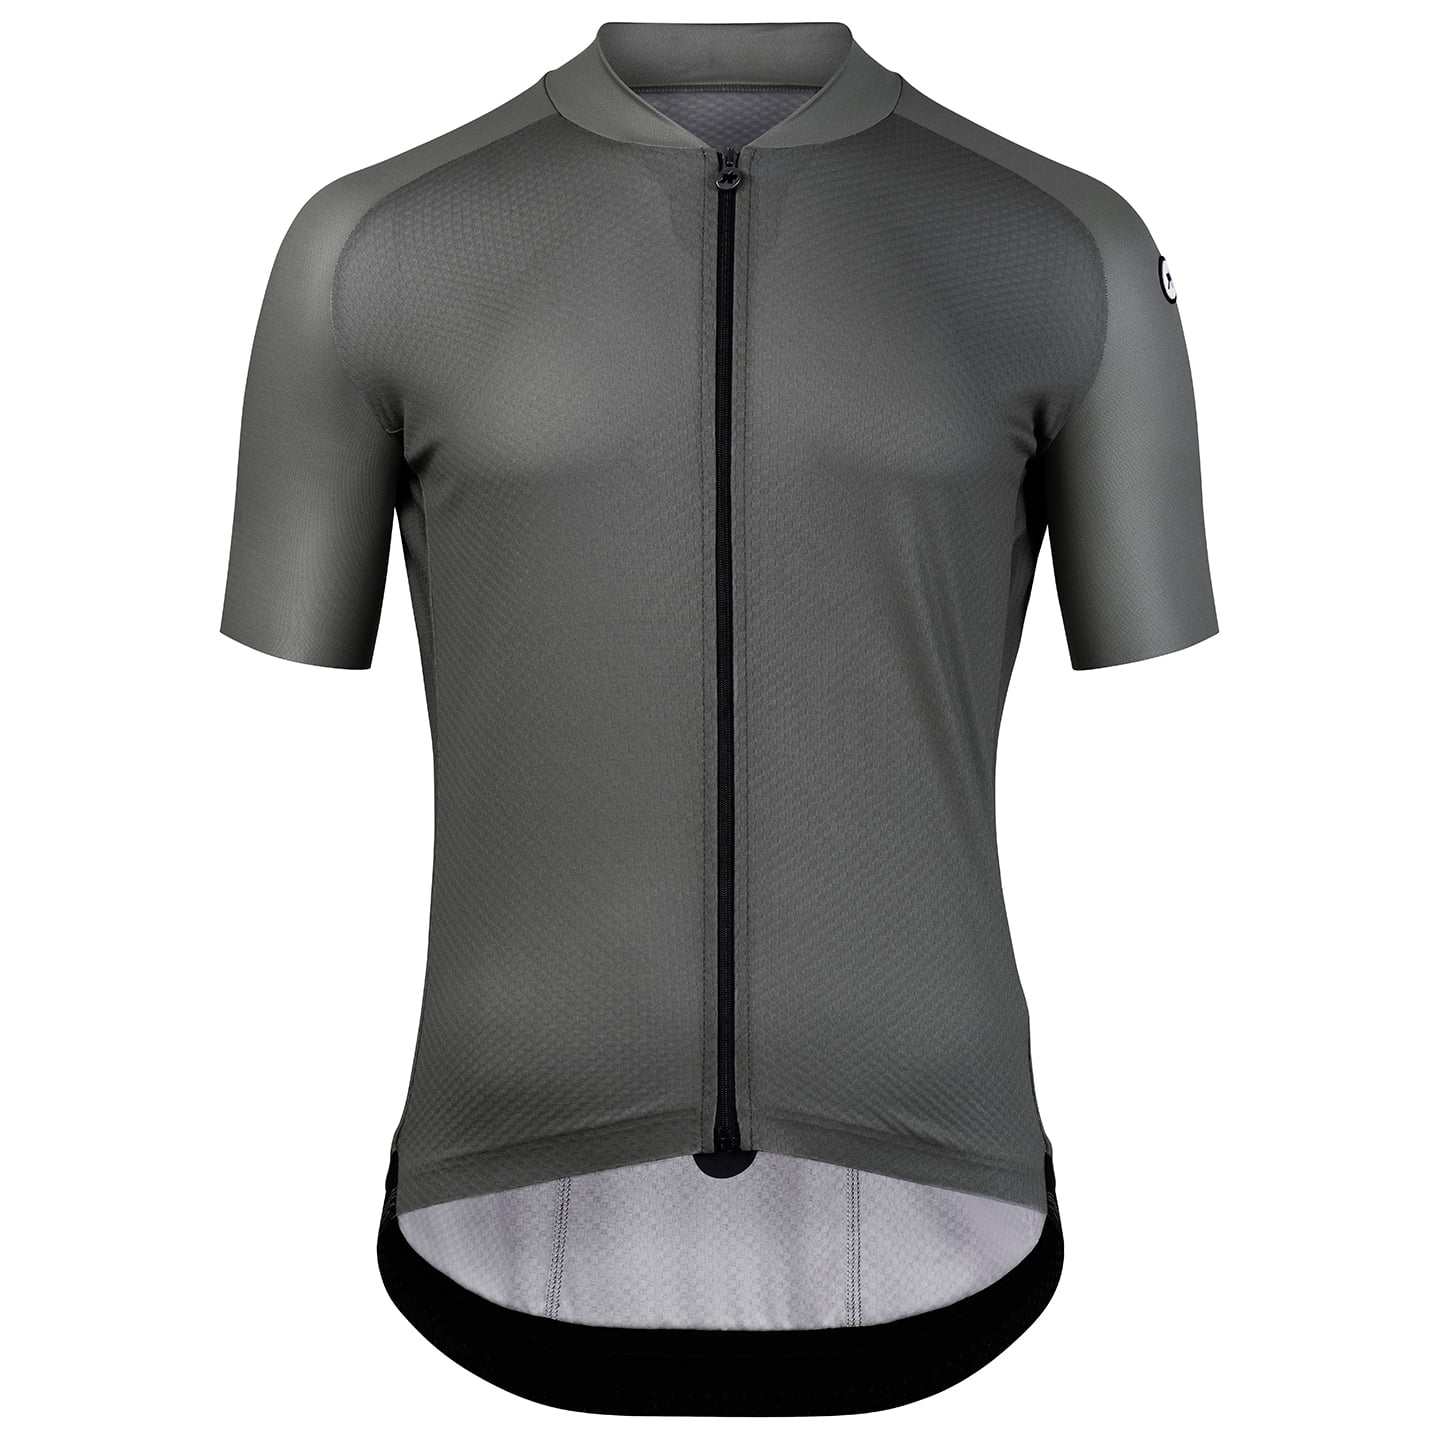 ASSOS Mille GT C2 EVO Short Sleeve Jersey Short Sleeve Jersey, for men, size 3XL, Cycling jersey, Cycle clothing